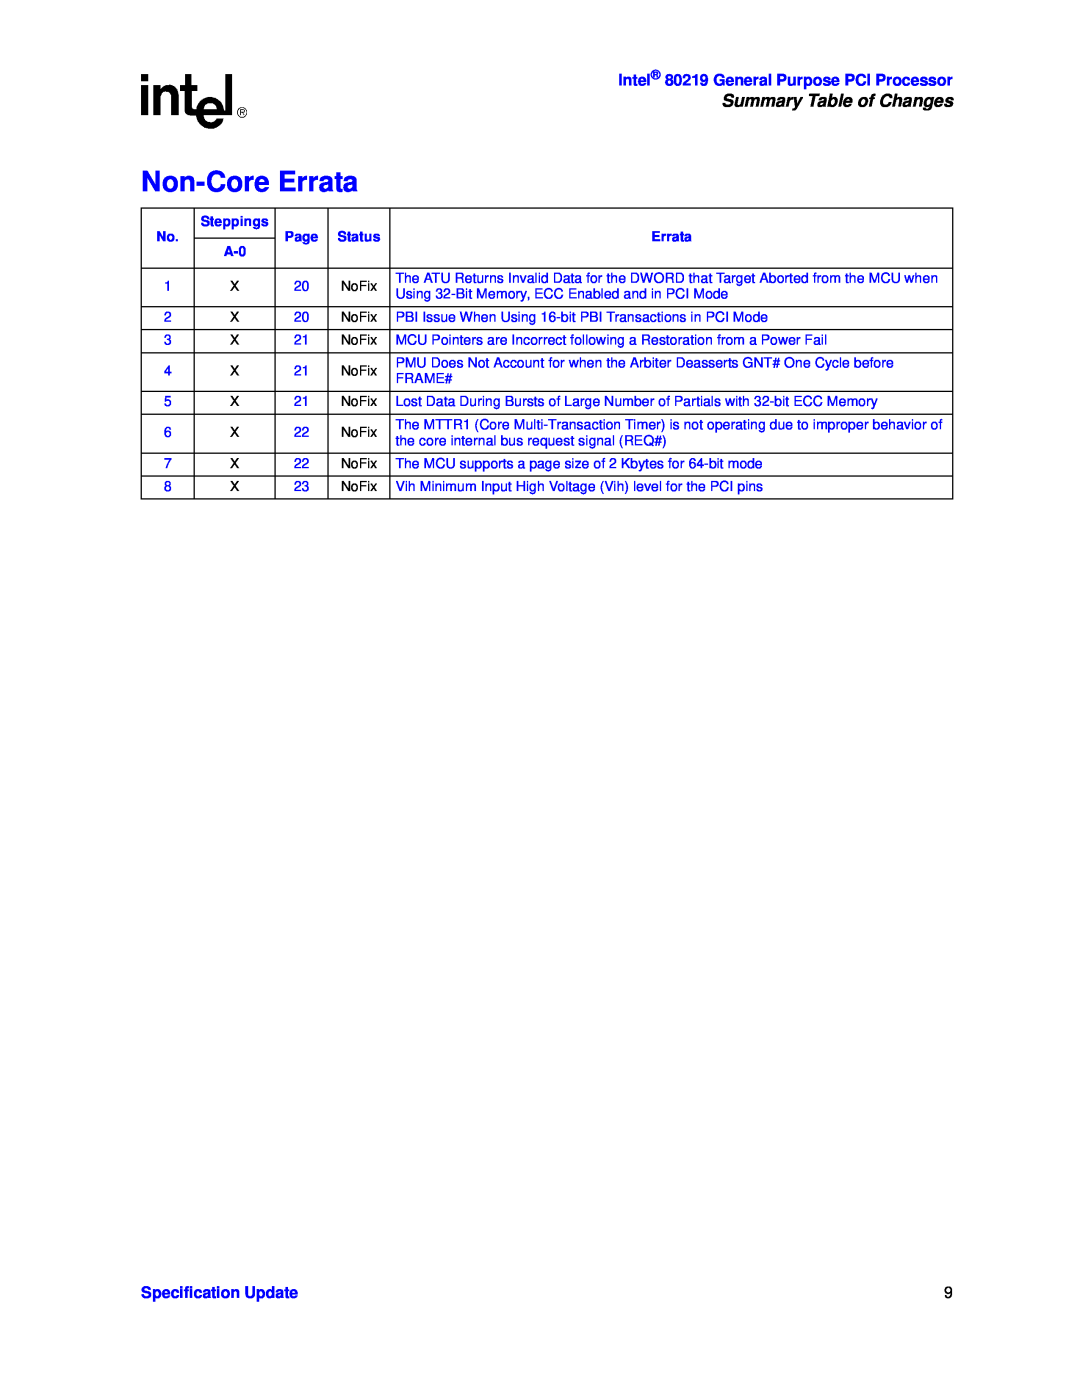 Intel Non-CoreErrata, Summary Table of Changes, Intel 80219 General Purpose PCI Processor, Specification Update 